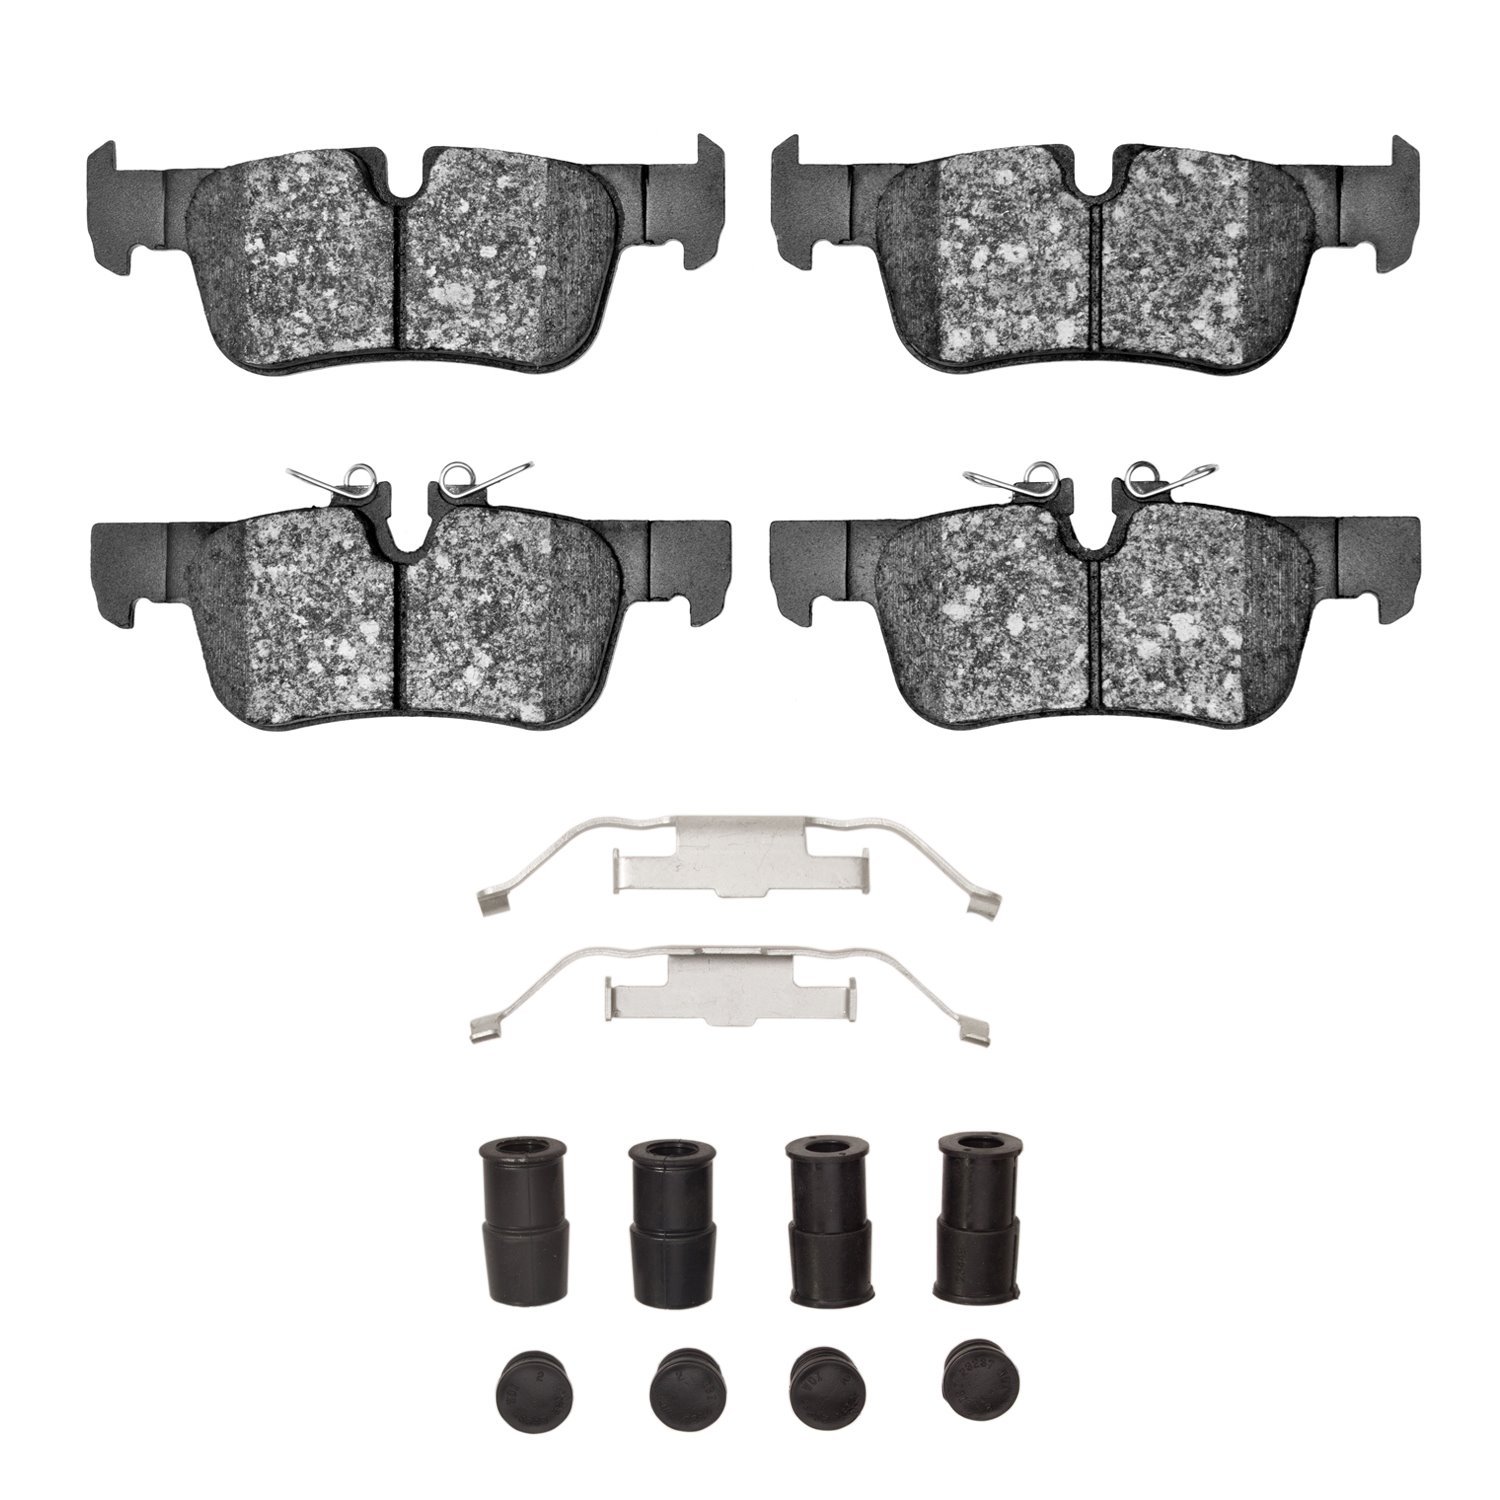 1551-1762-01 5000 Advanced Low-Metallic Brake Pads & Hardware Kit, Fits Select Multiple Makes/Models, Position: Rear